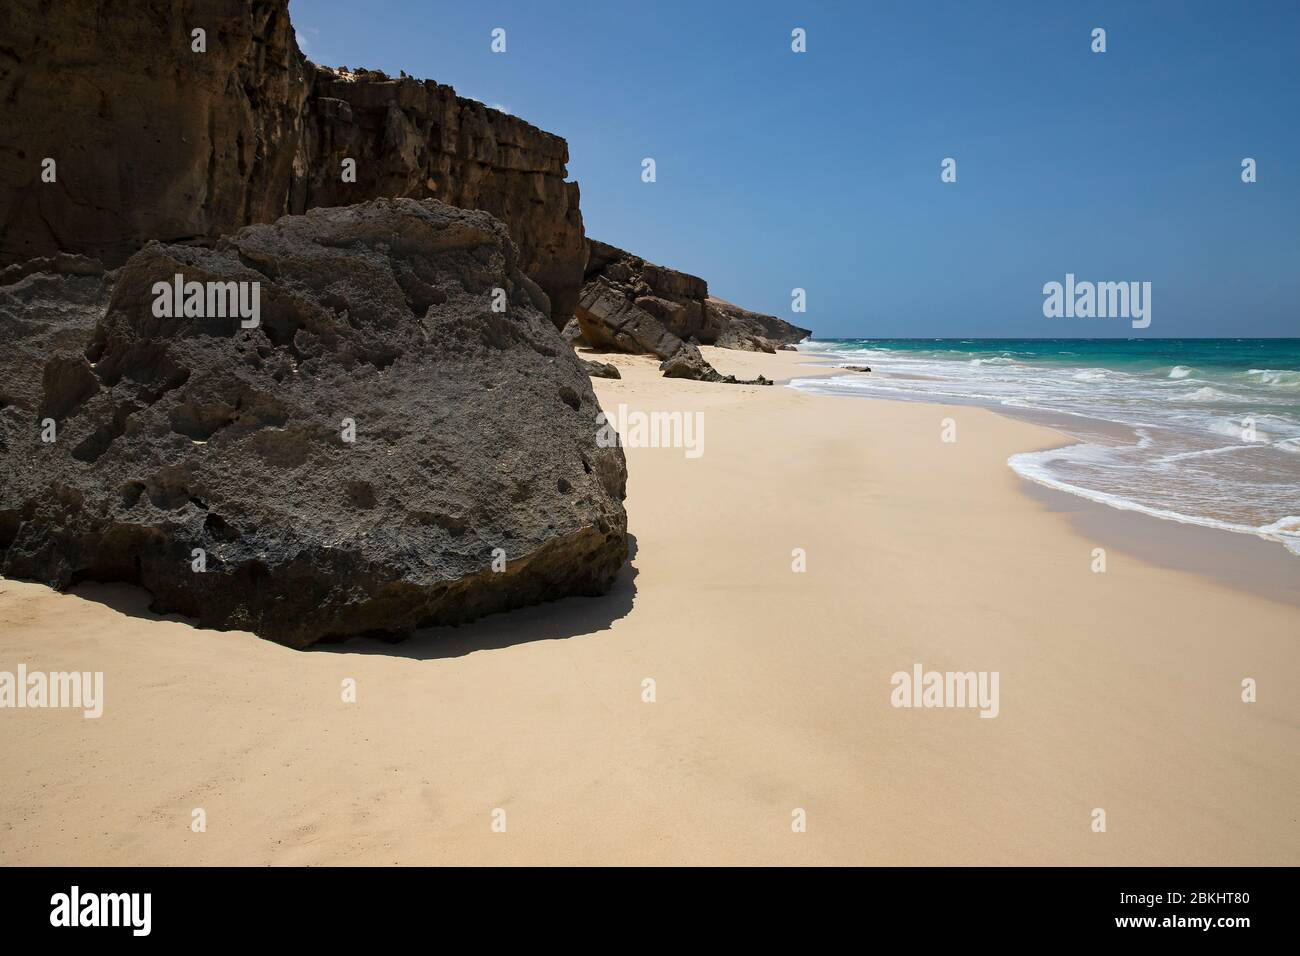 Volcanic rock at Praia de Santa Mónica, sandy beach on the island of Boa Vista, Cape Verde / Cabo Verde archipelago in the Atlantic Ocean Stock Photo